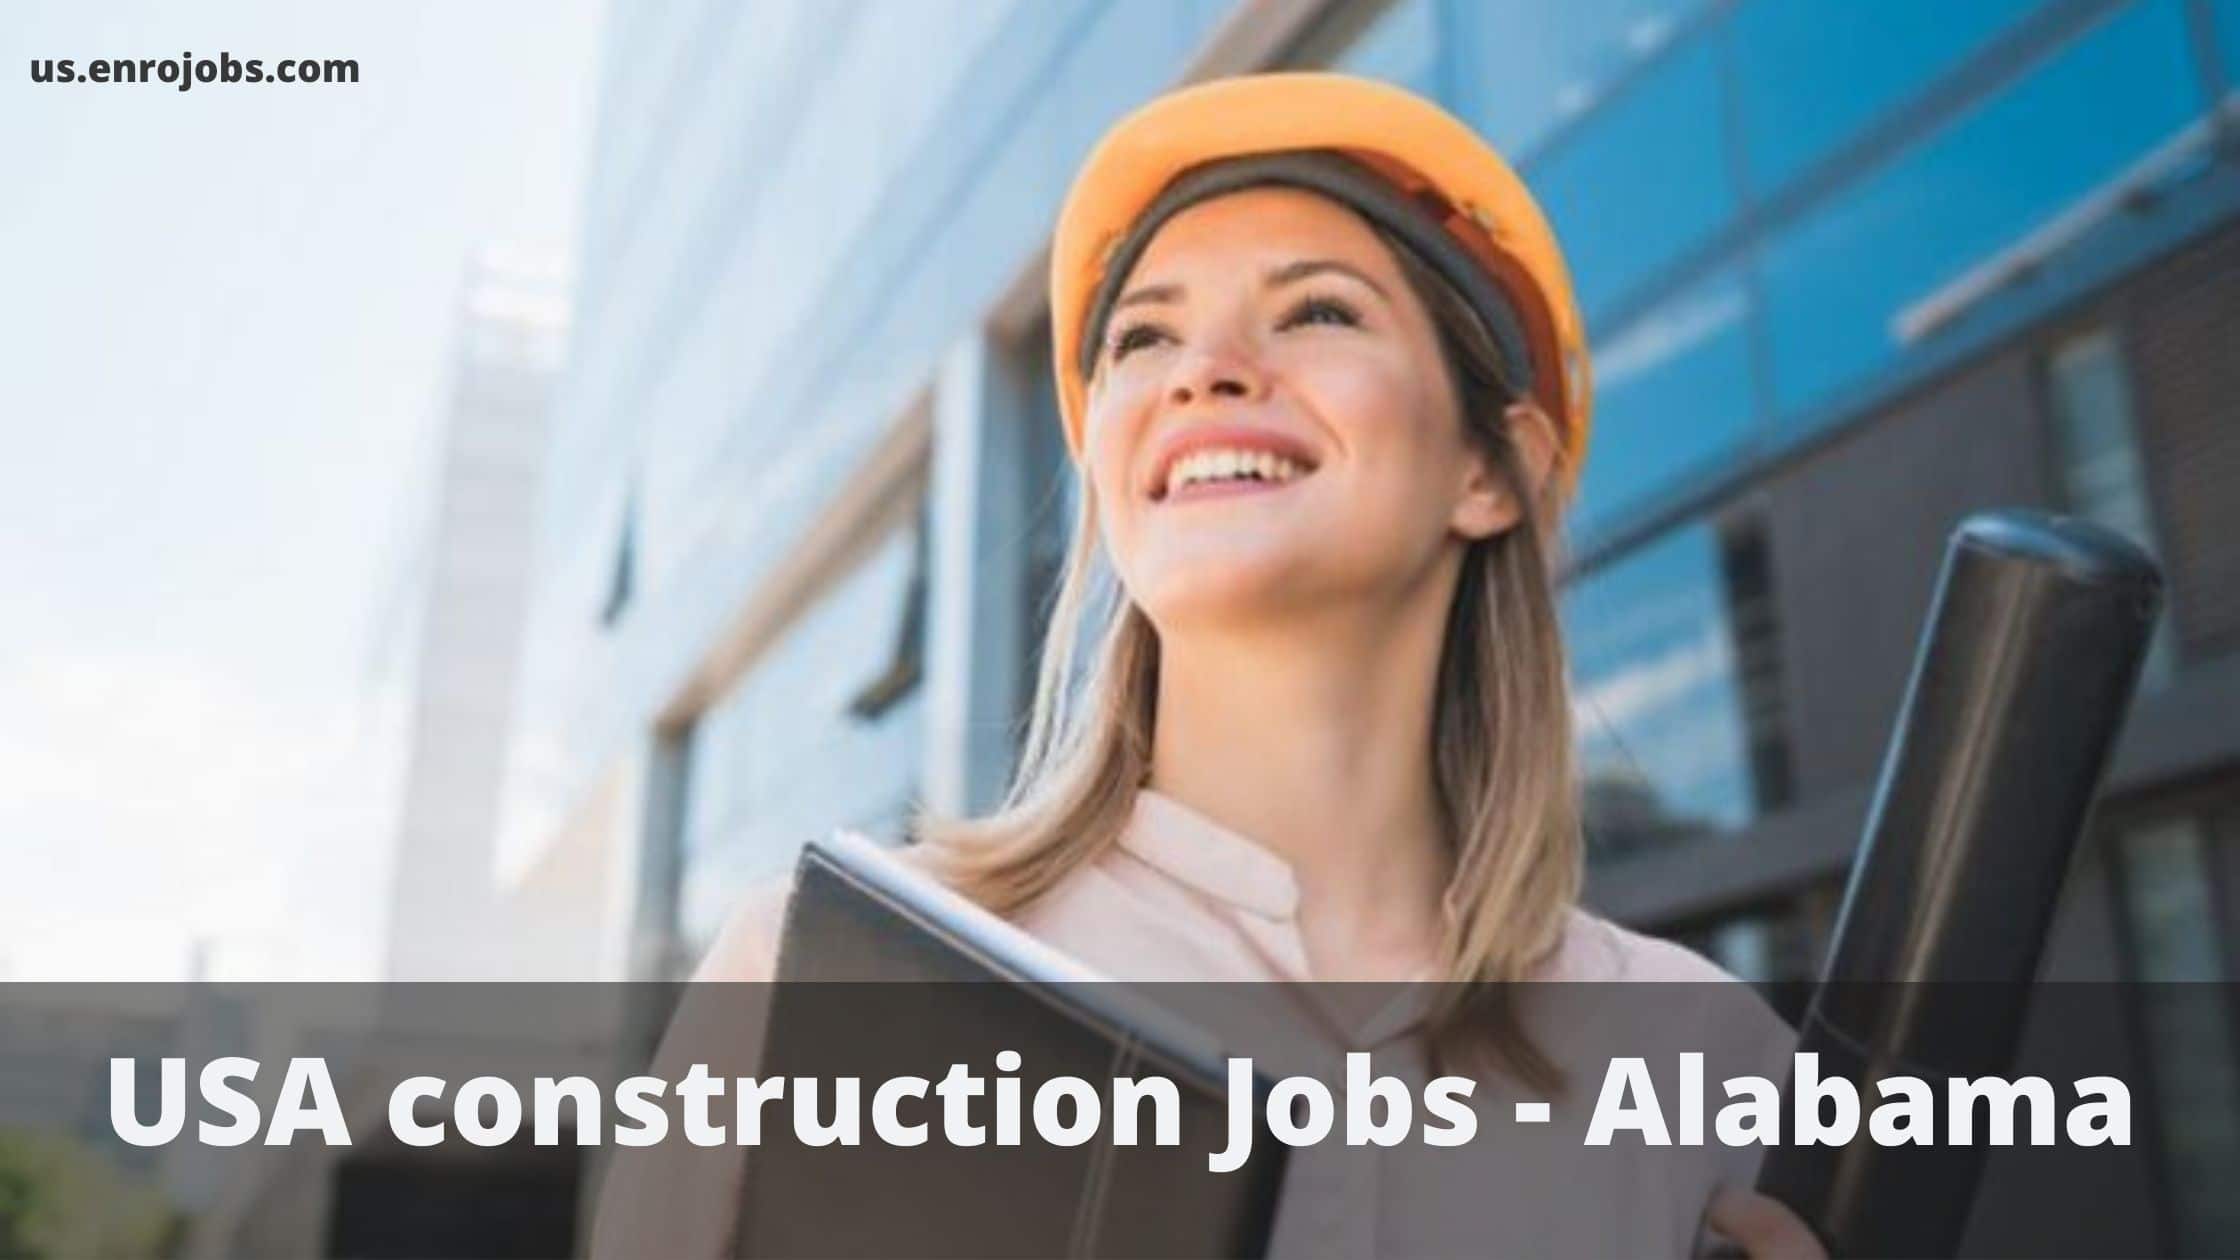 USA-construction-Jobs-Alabama - America